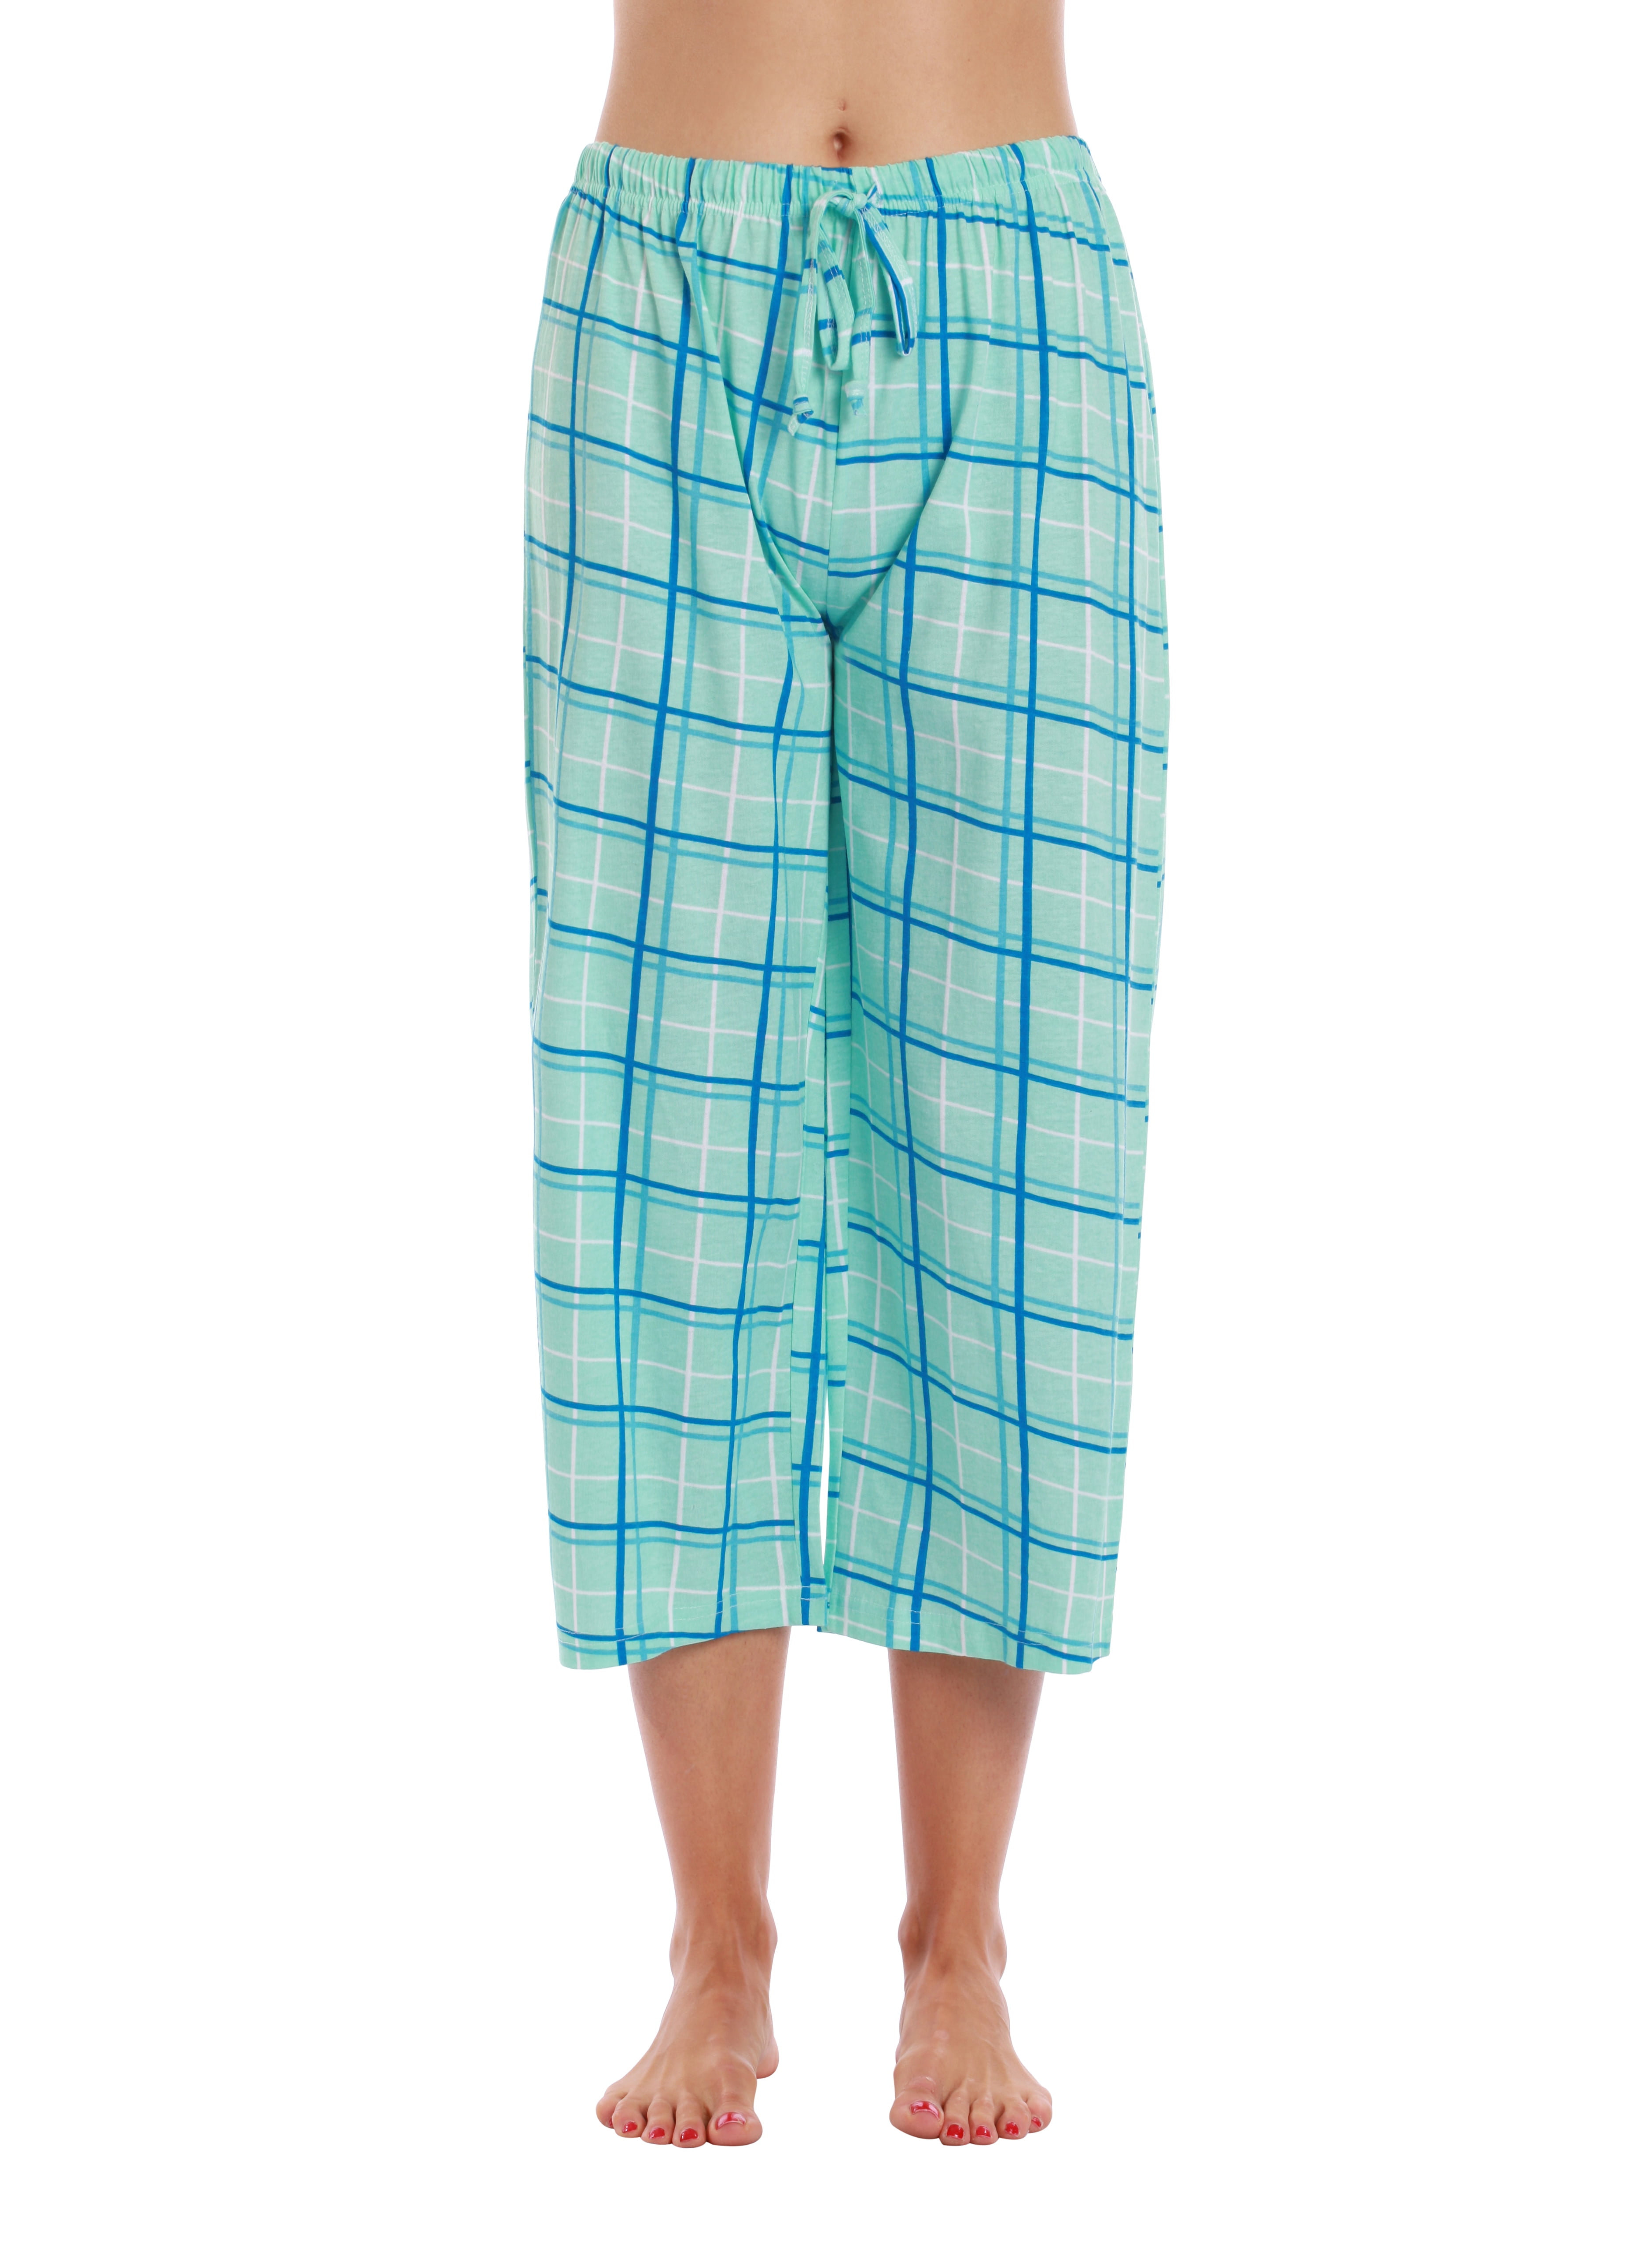 Just Love 100% Cotton Women's Capri Pajama Pants Sleepwear